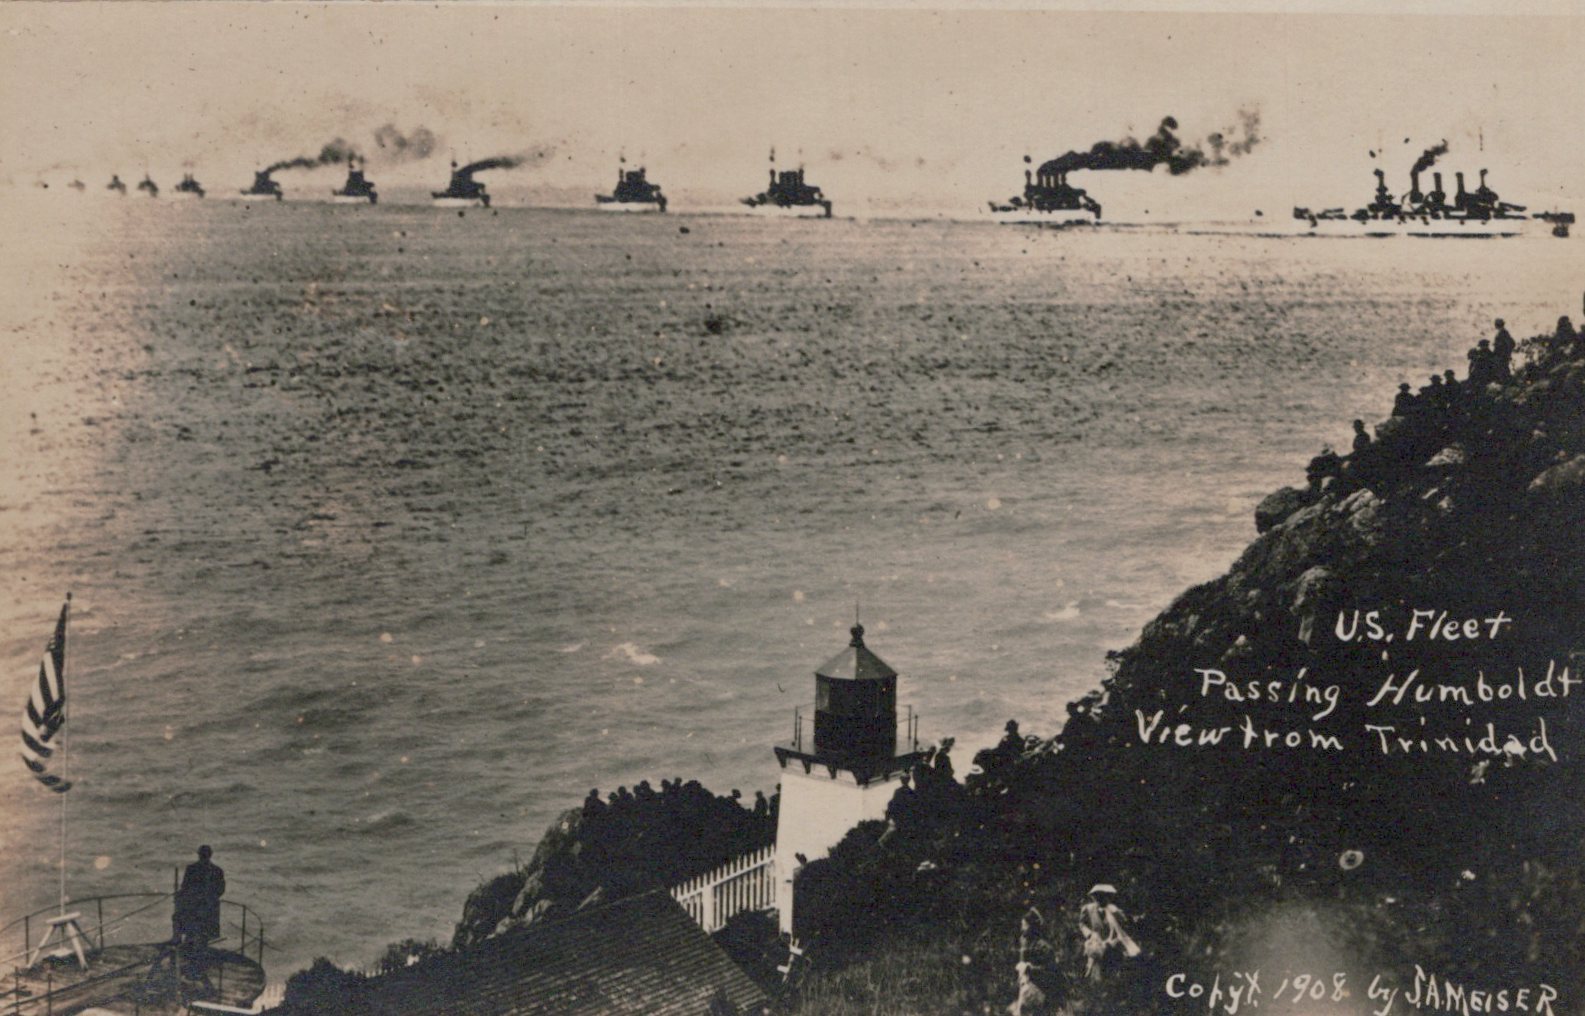 The Atlantic Fleet entering the Golden Gate as seen from Trinidad